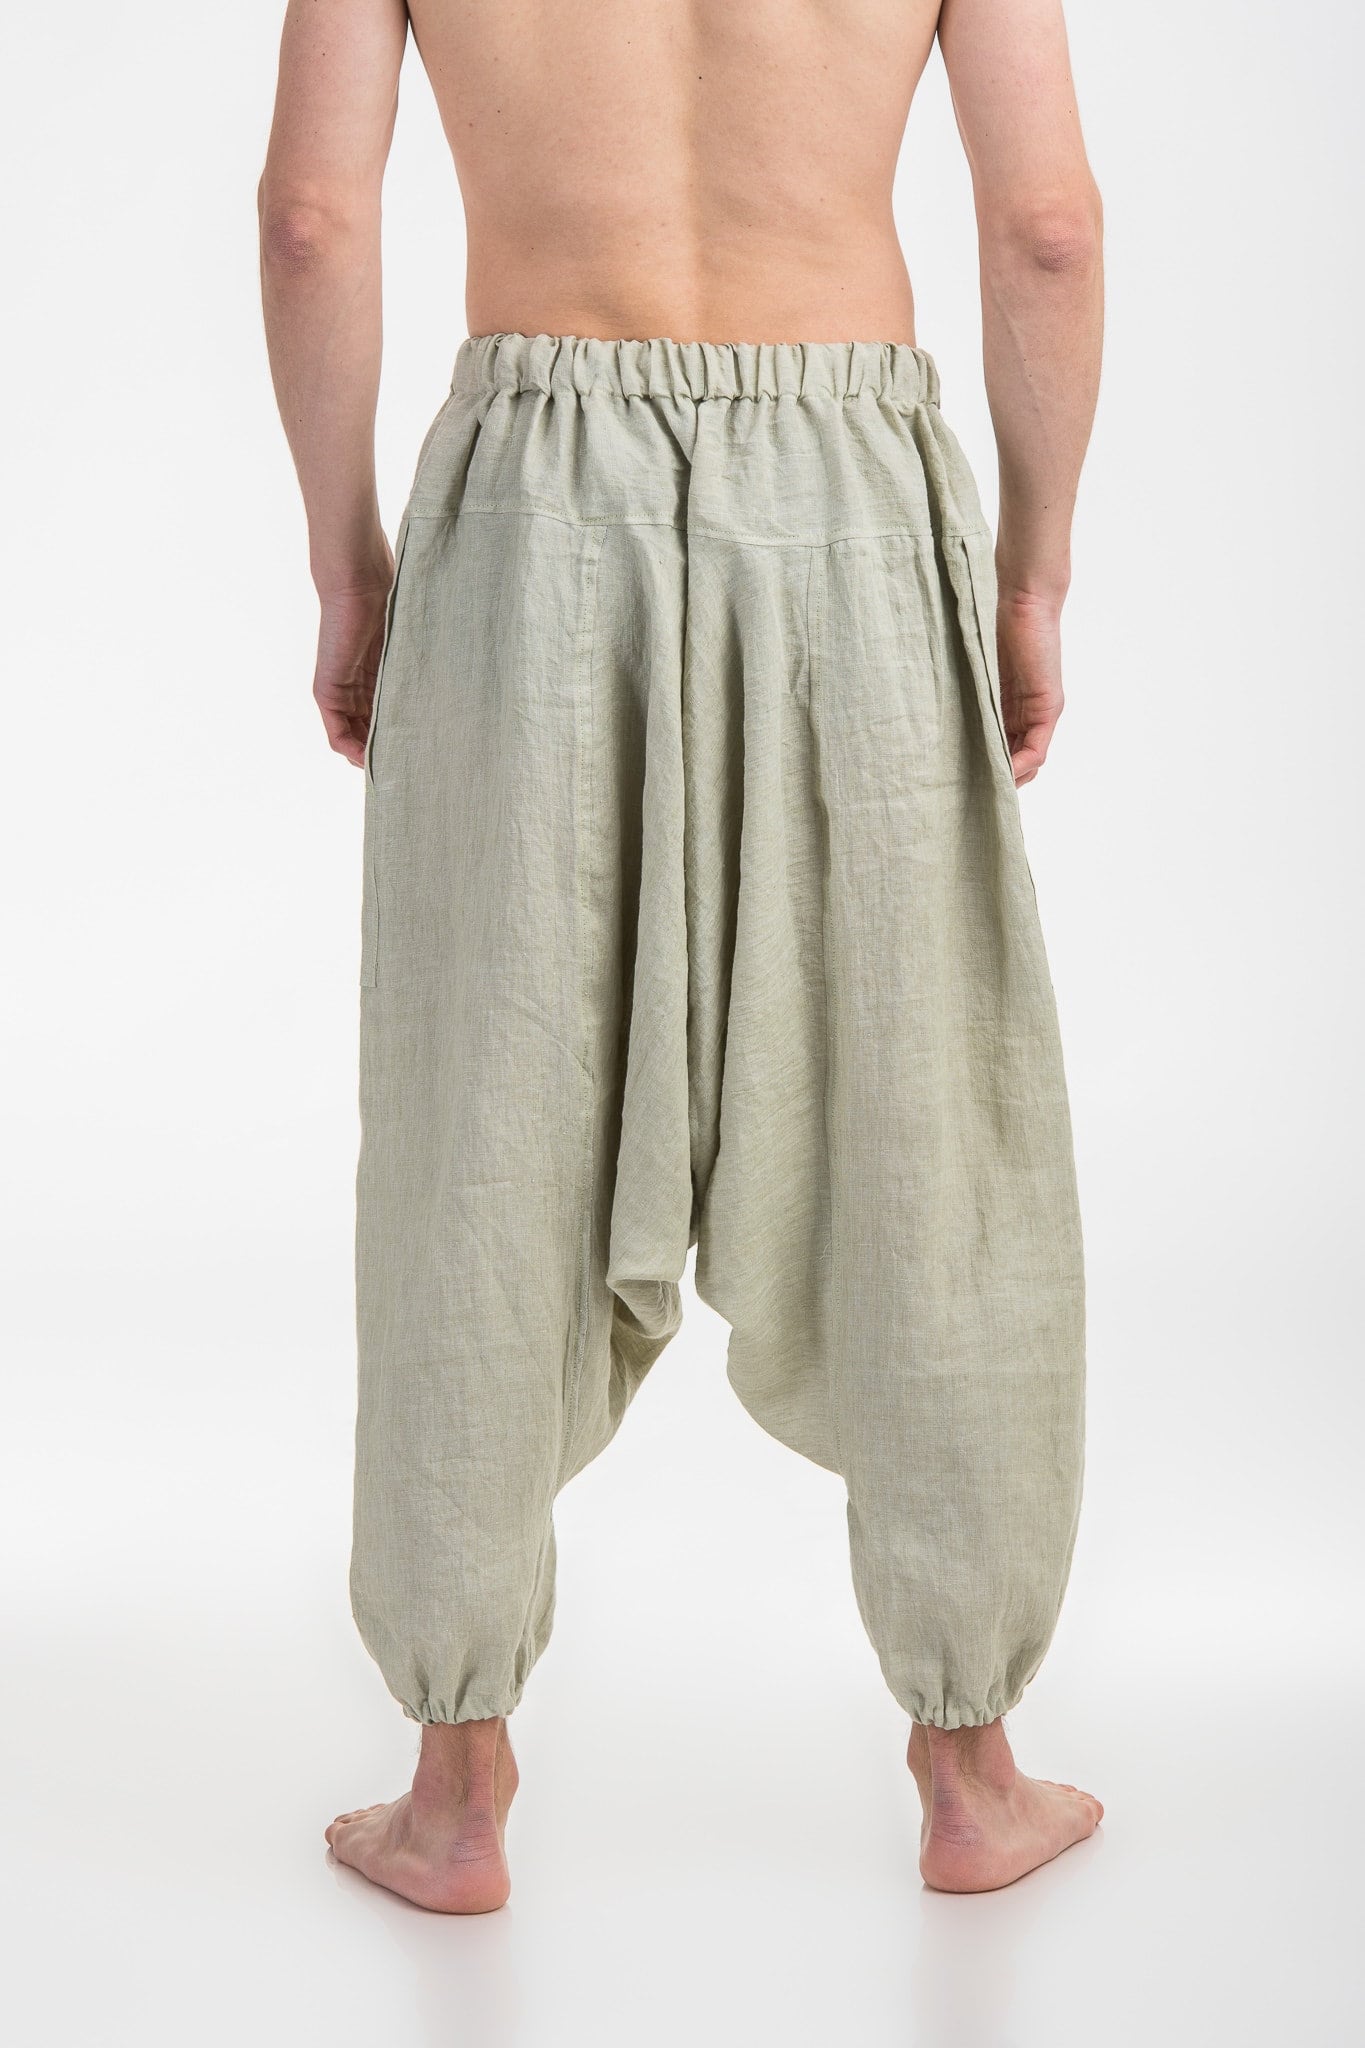 Loose Linen Harem Pants YOGA Pants Drop-crotch Pants Aladdin | Etsy